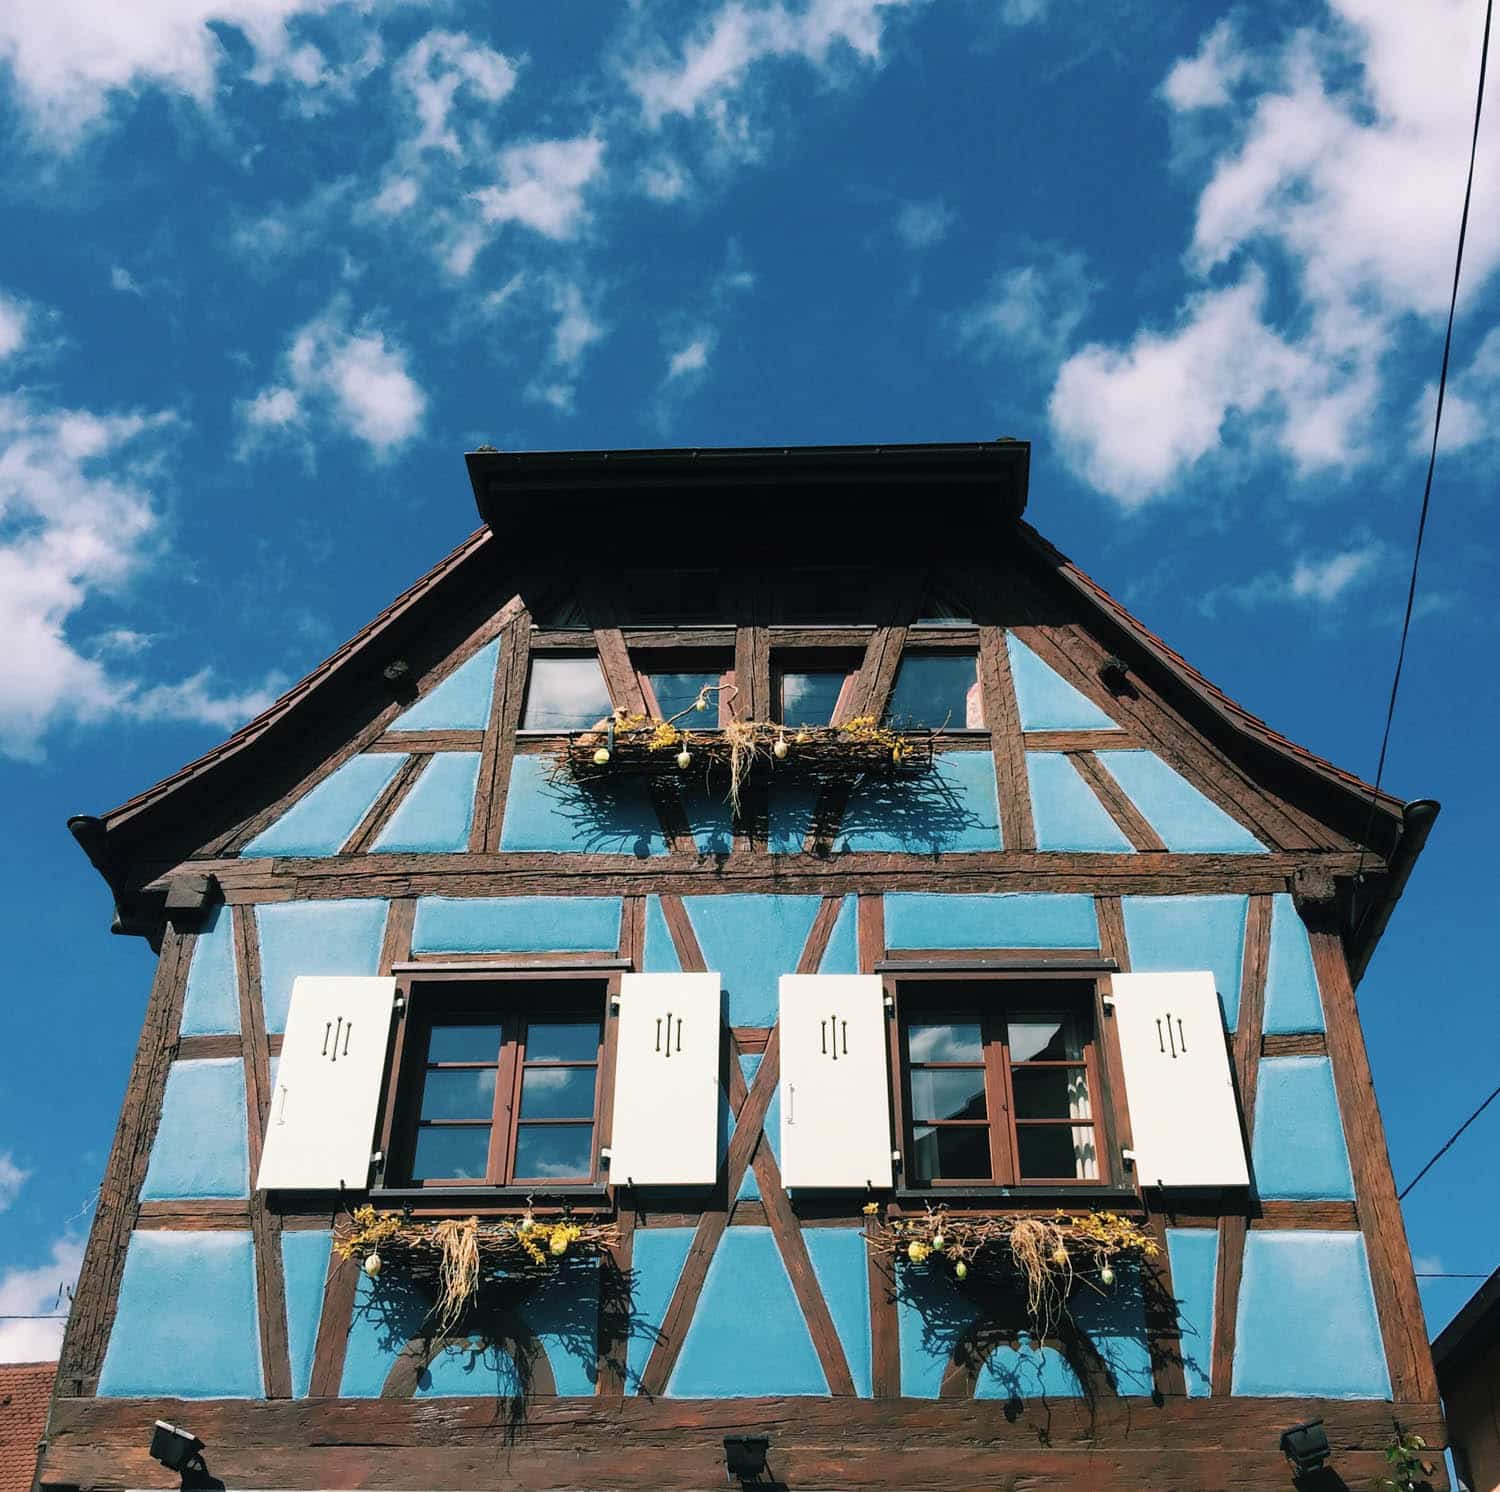 Colmar, France – Real-life fairytale village